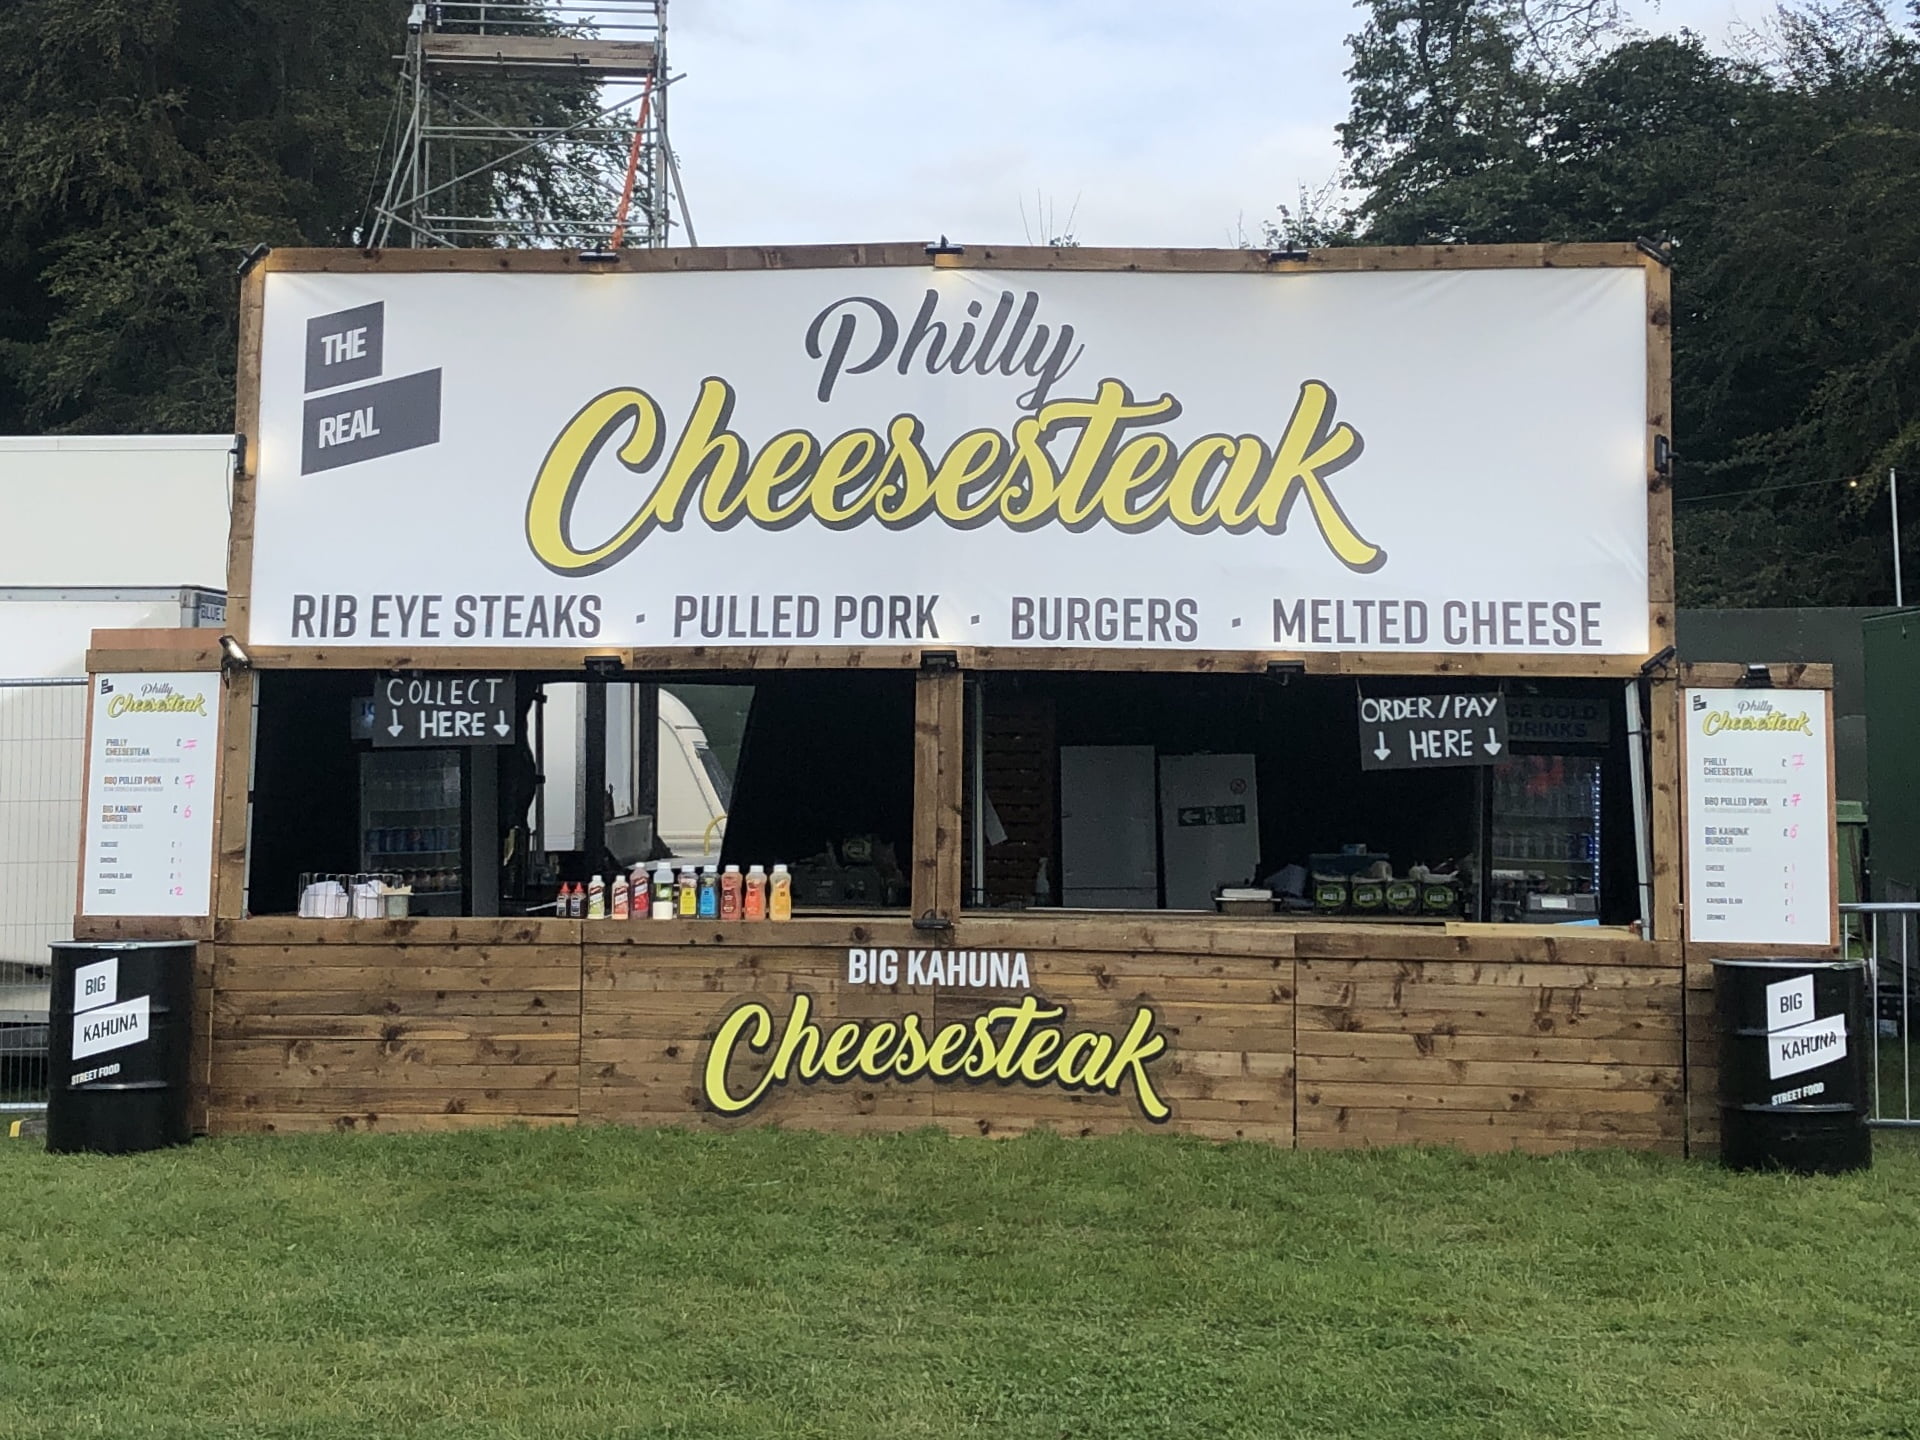 Big Kahuna - Philly Cheese steak stand